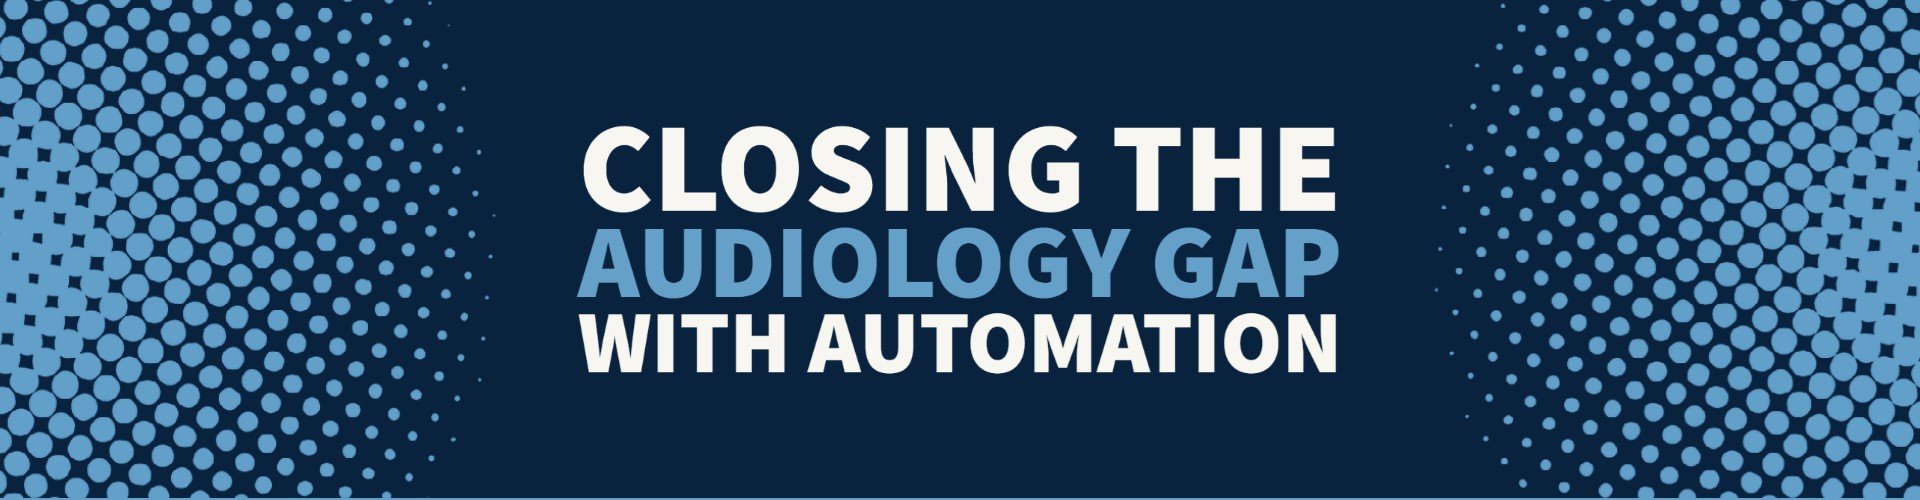 closing-the-audiology-gap